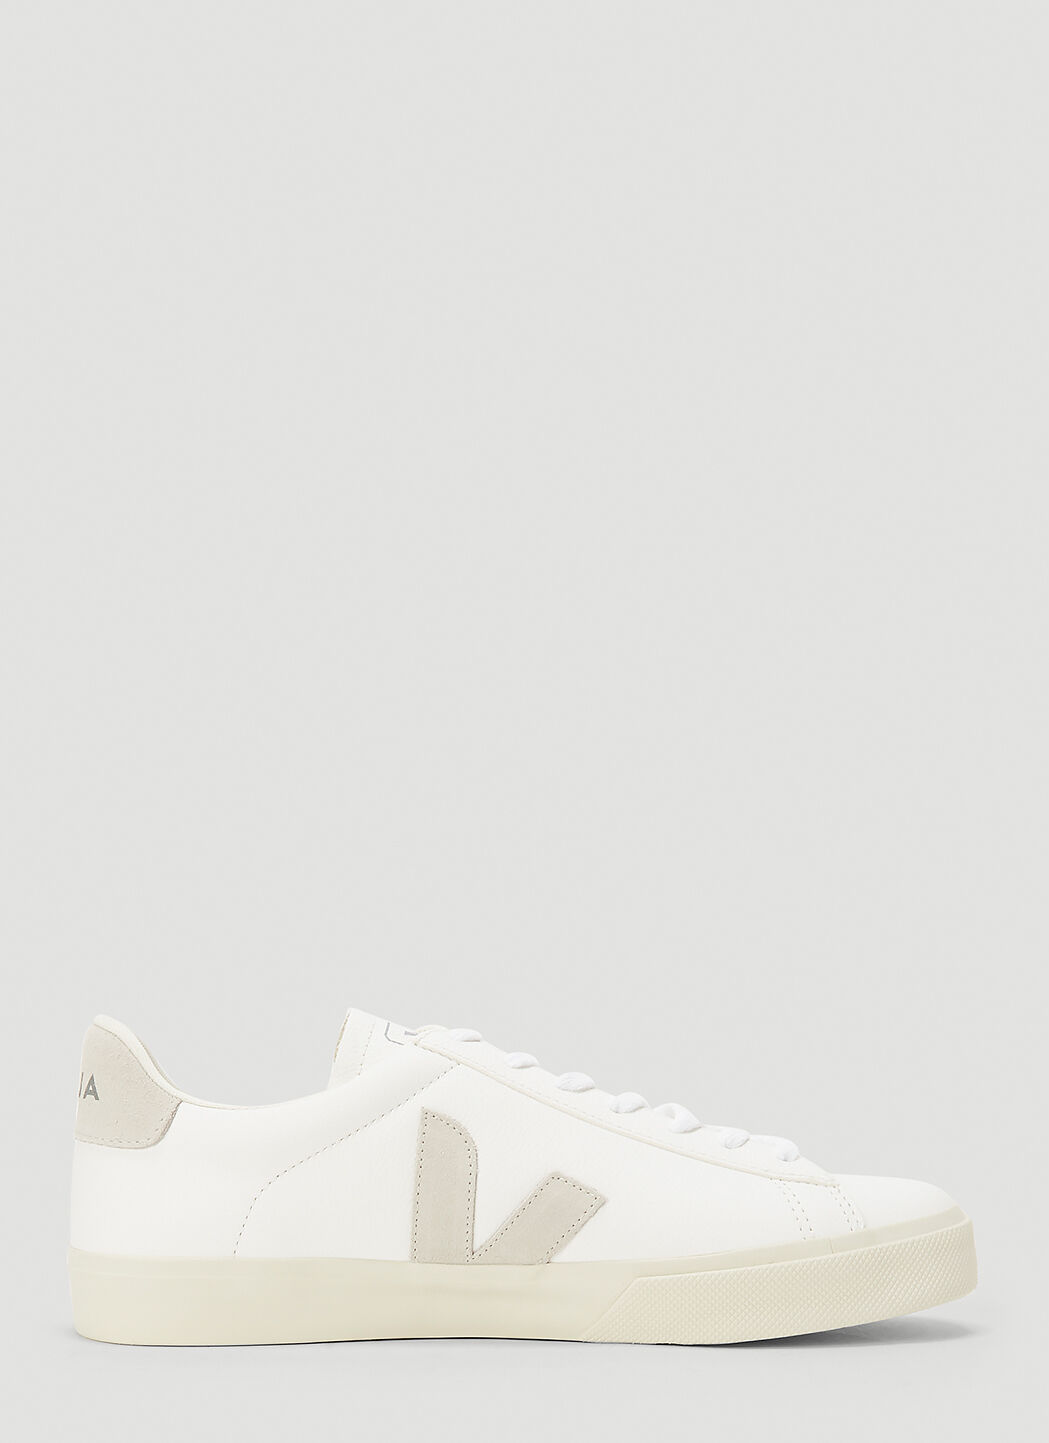 Veja Campo Leather Sneakers White vej0343010